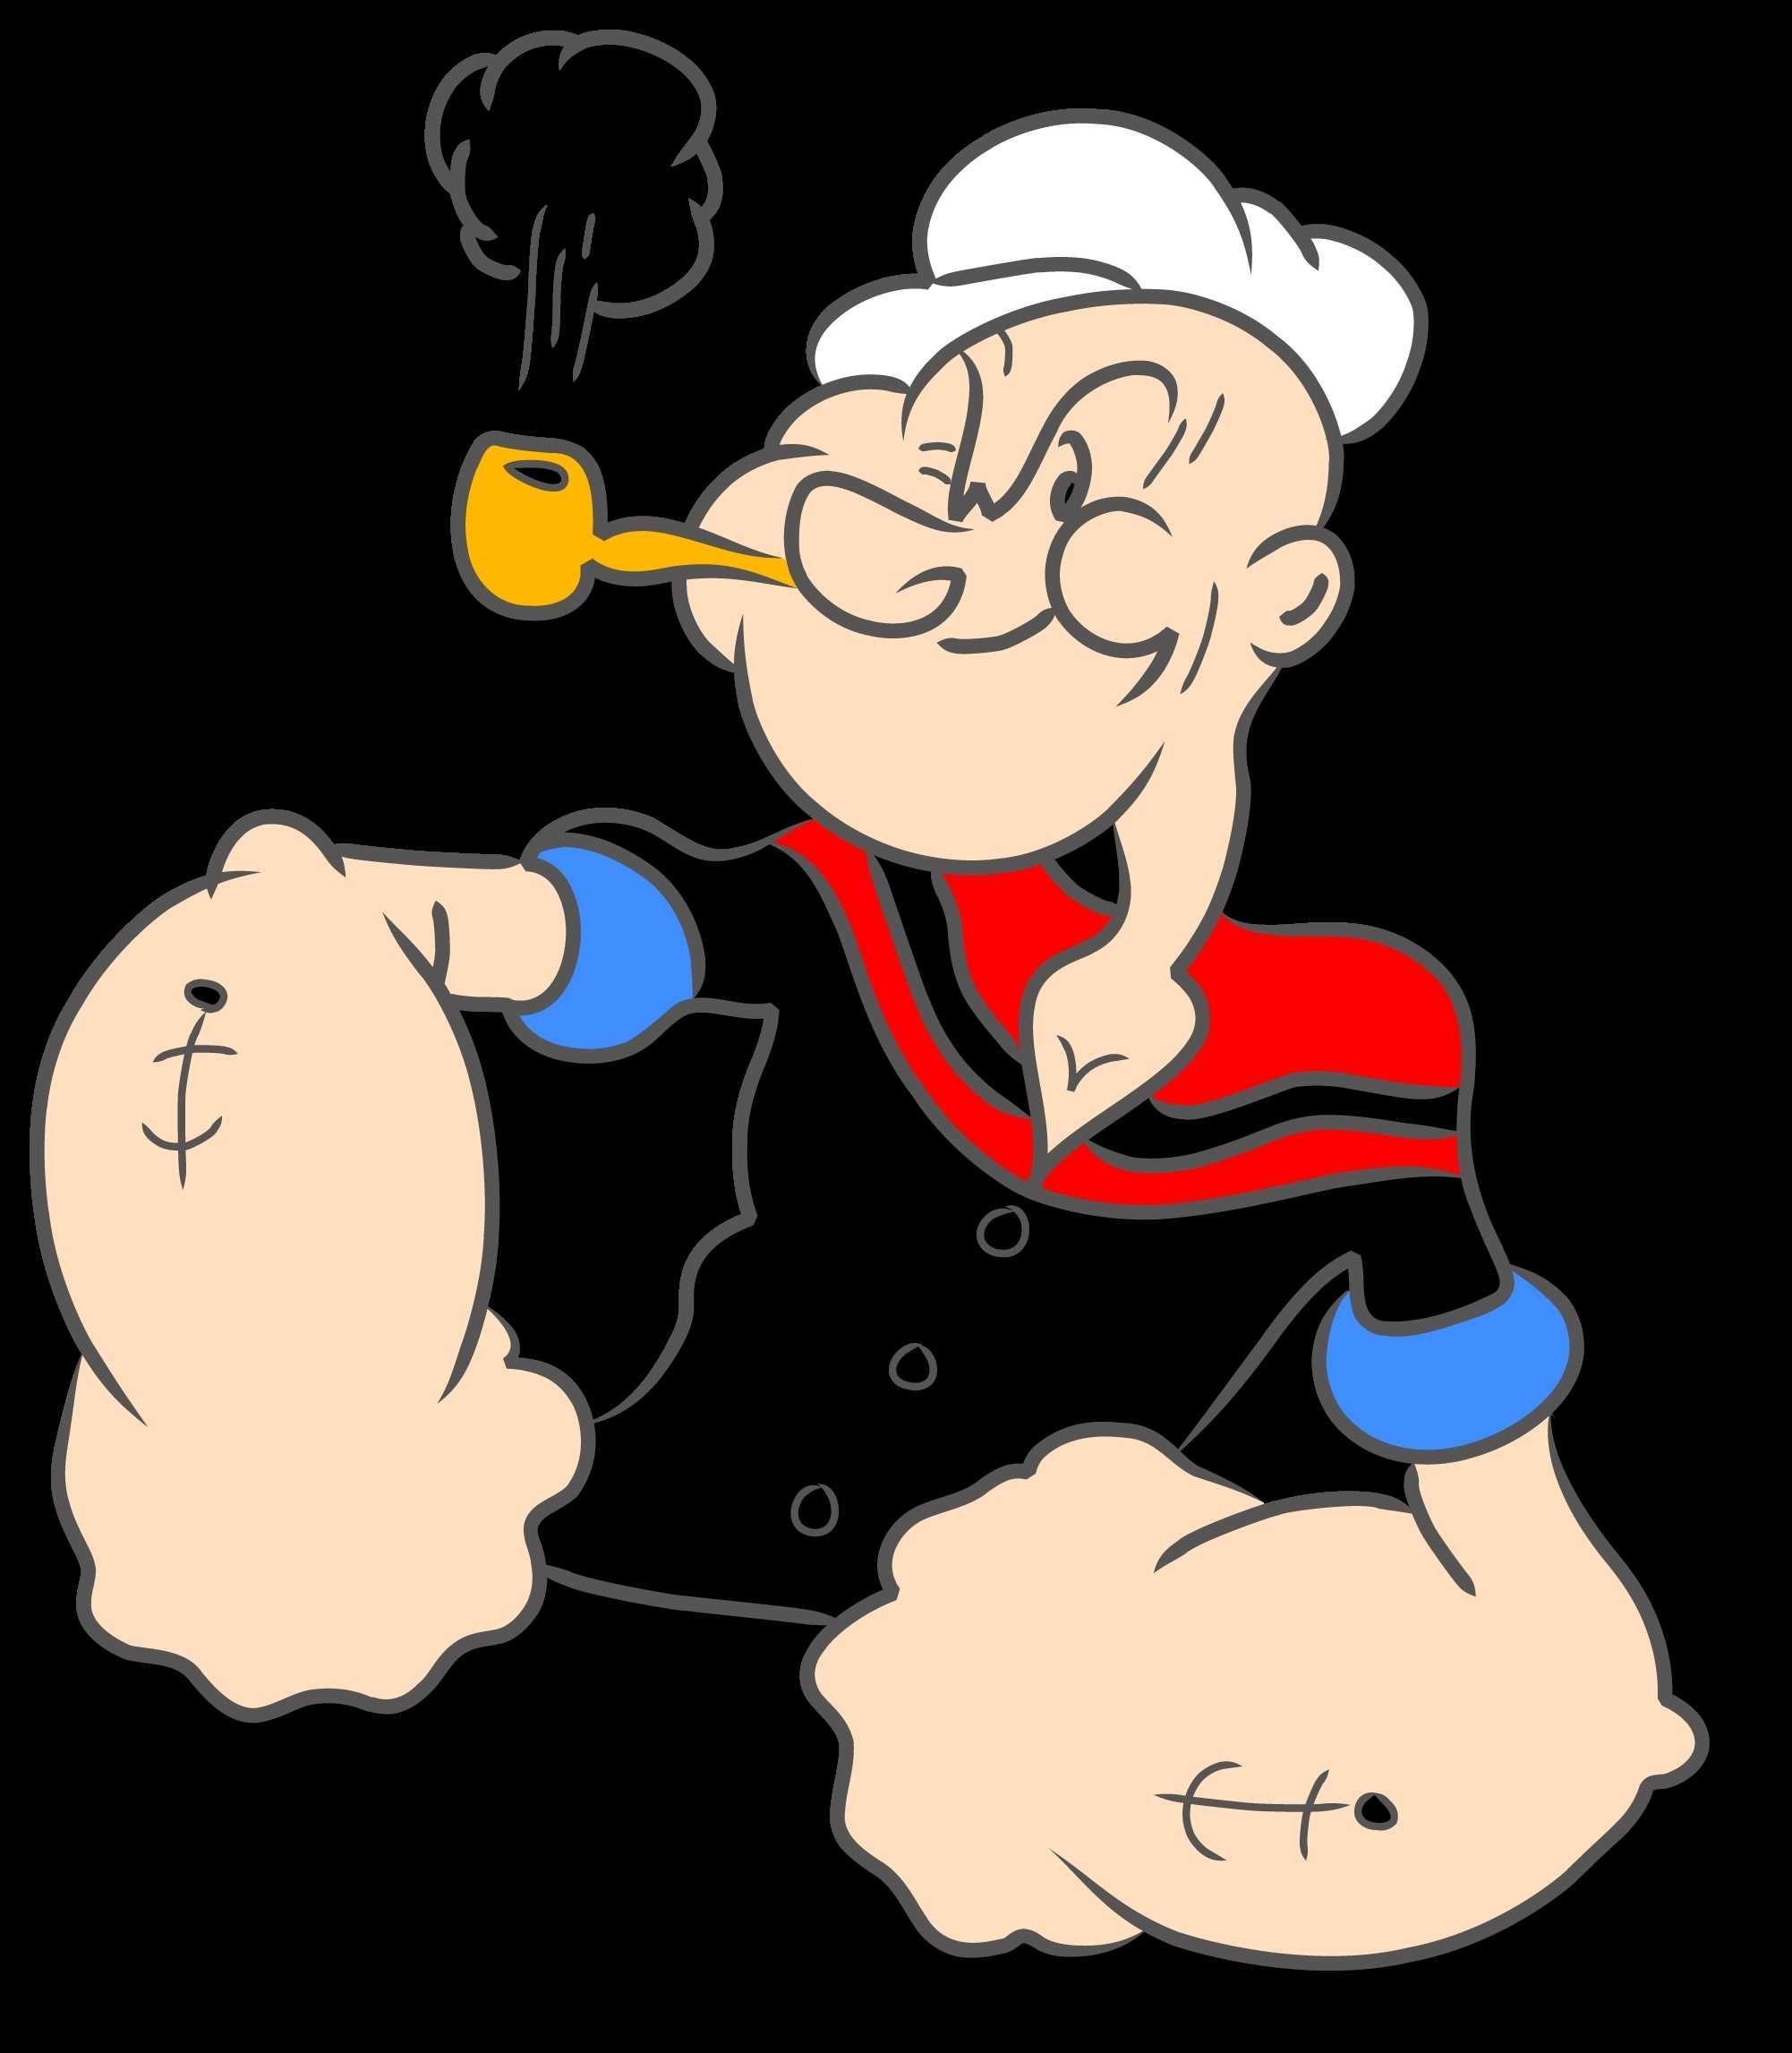 Popeye The Sailor Man Full Hd Wallpaper 4k